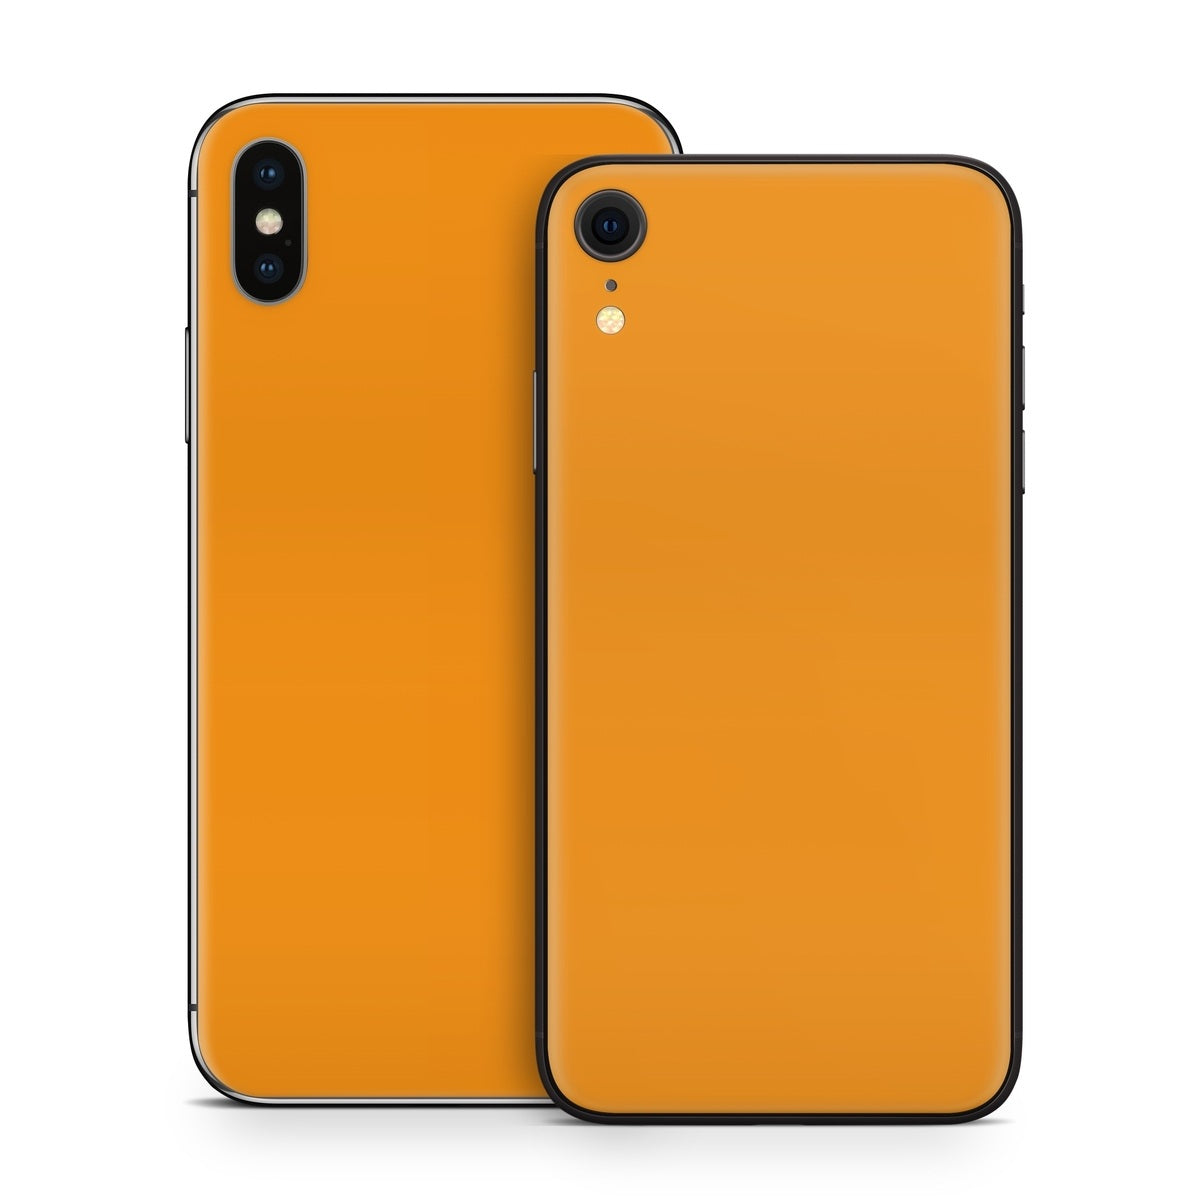 Solid State Orange - Apple iPhone X Skin